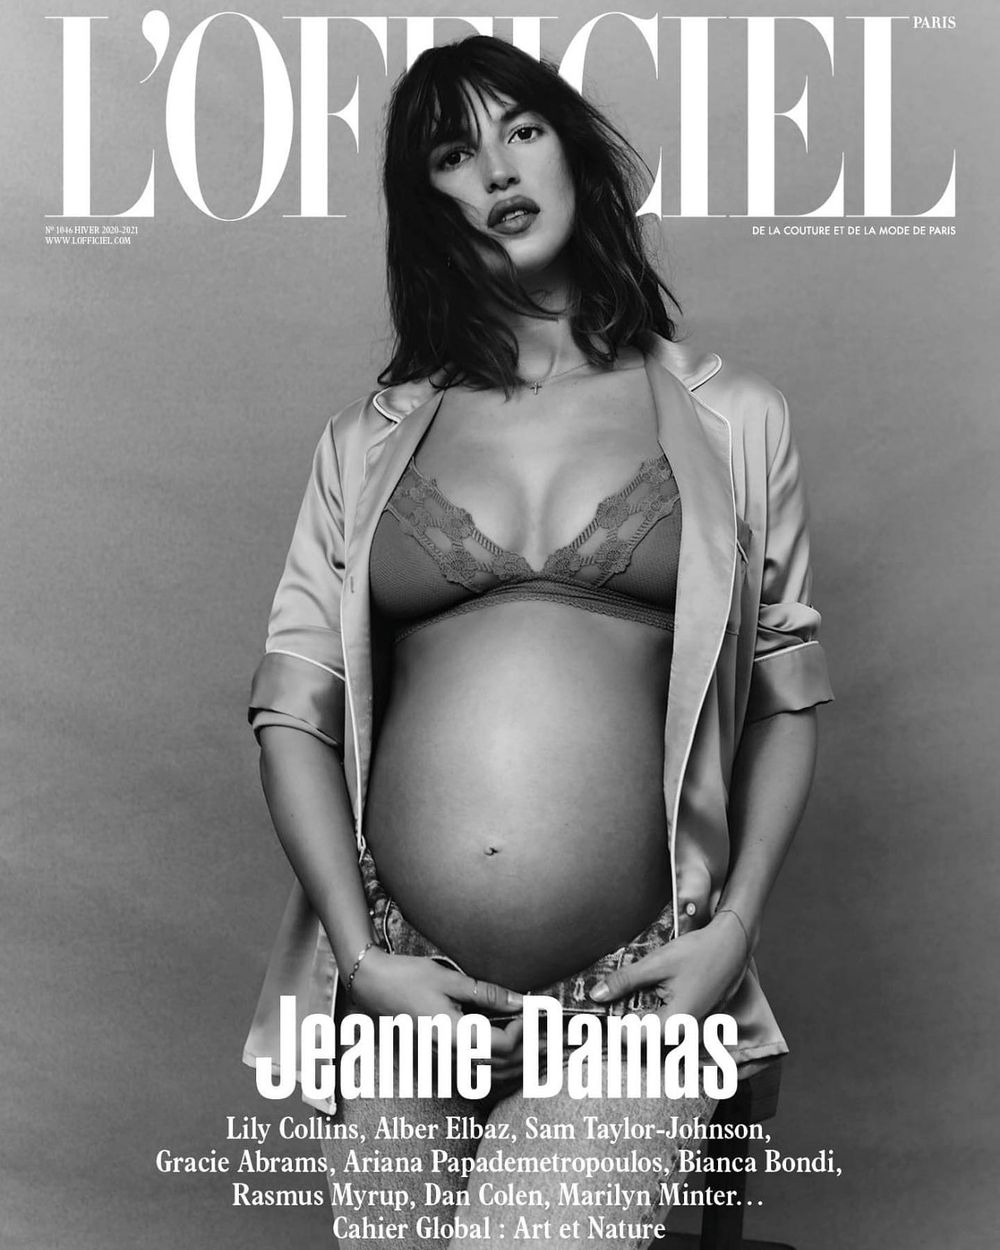 Jeanne Damas pregnant french L'officiel magazine cover 2020